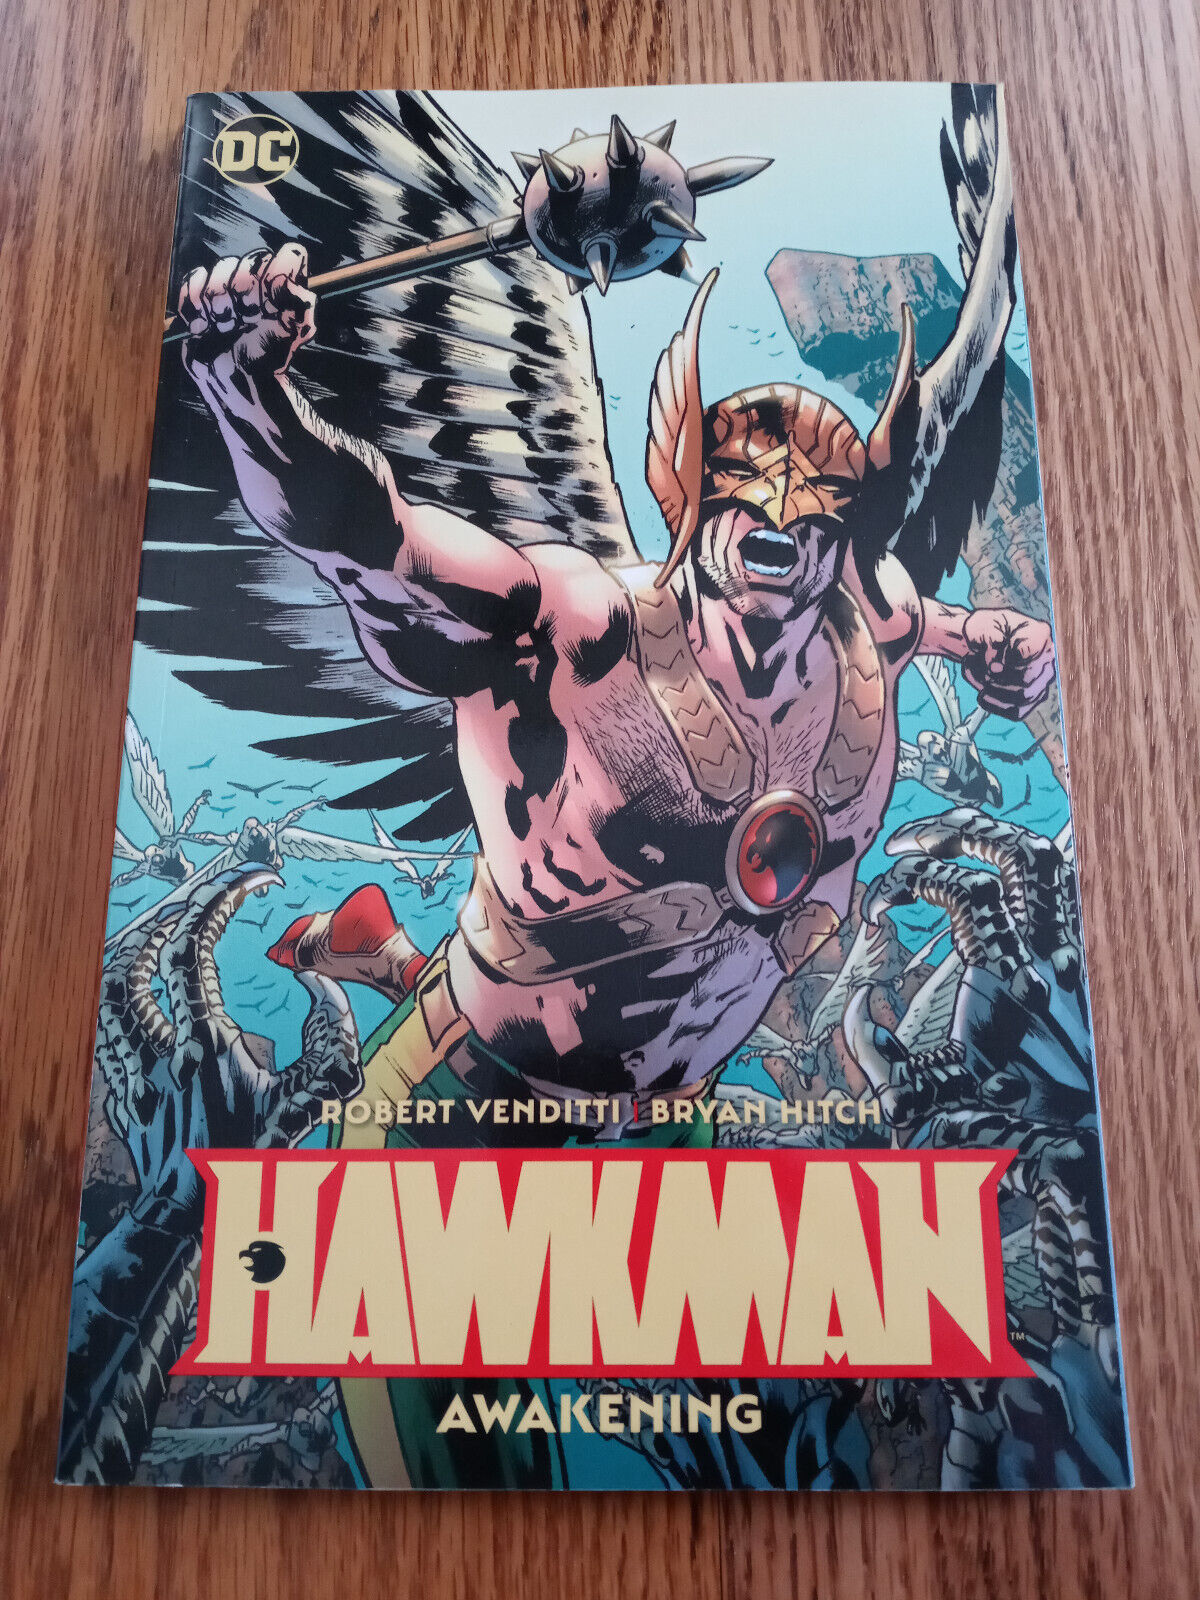 DC Comics Hawkman: Awakening by Robert Venditti (Trade Paperback, 2019)